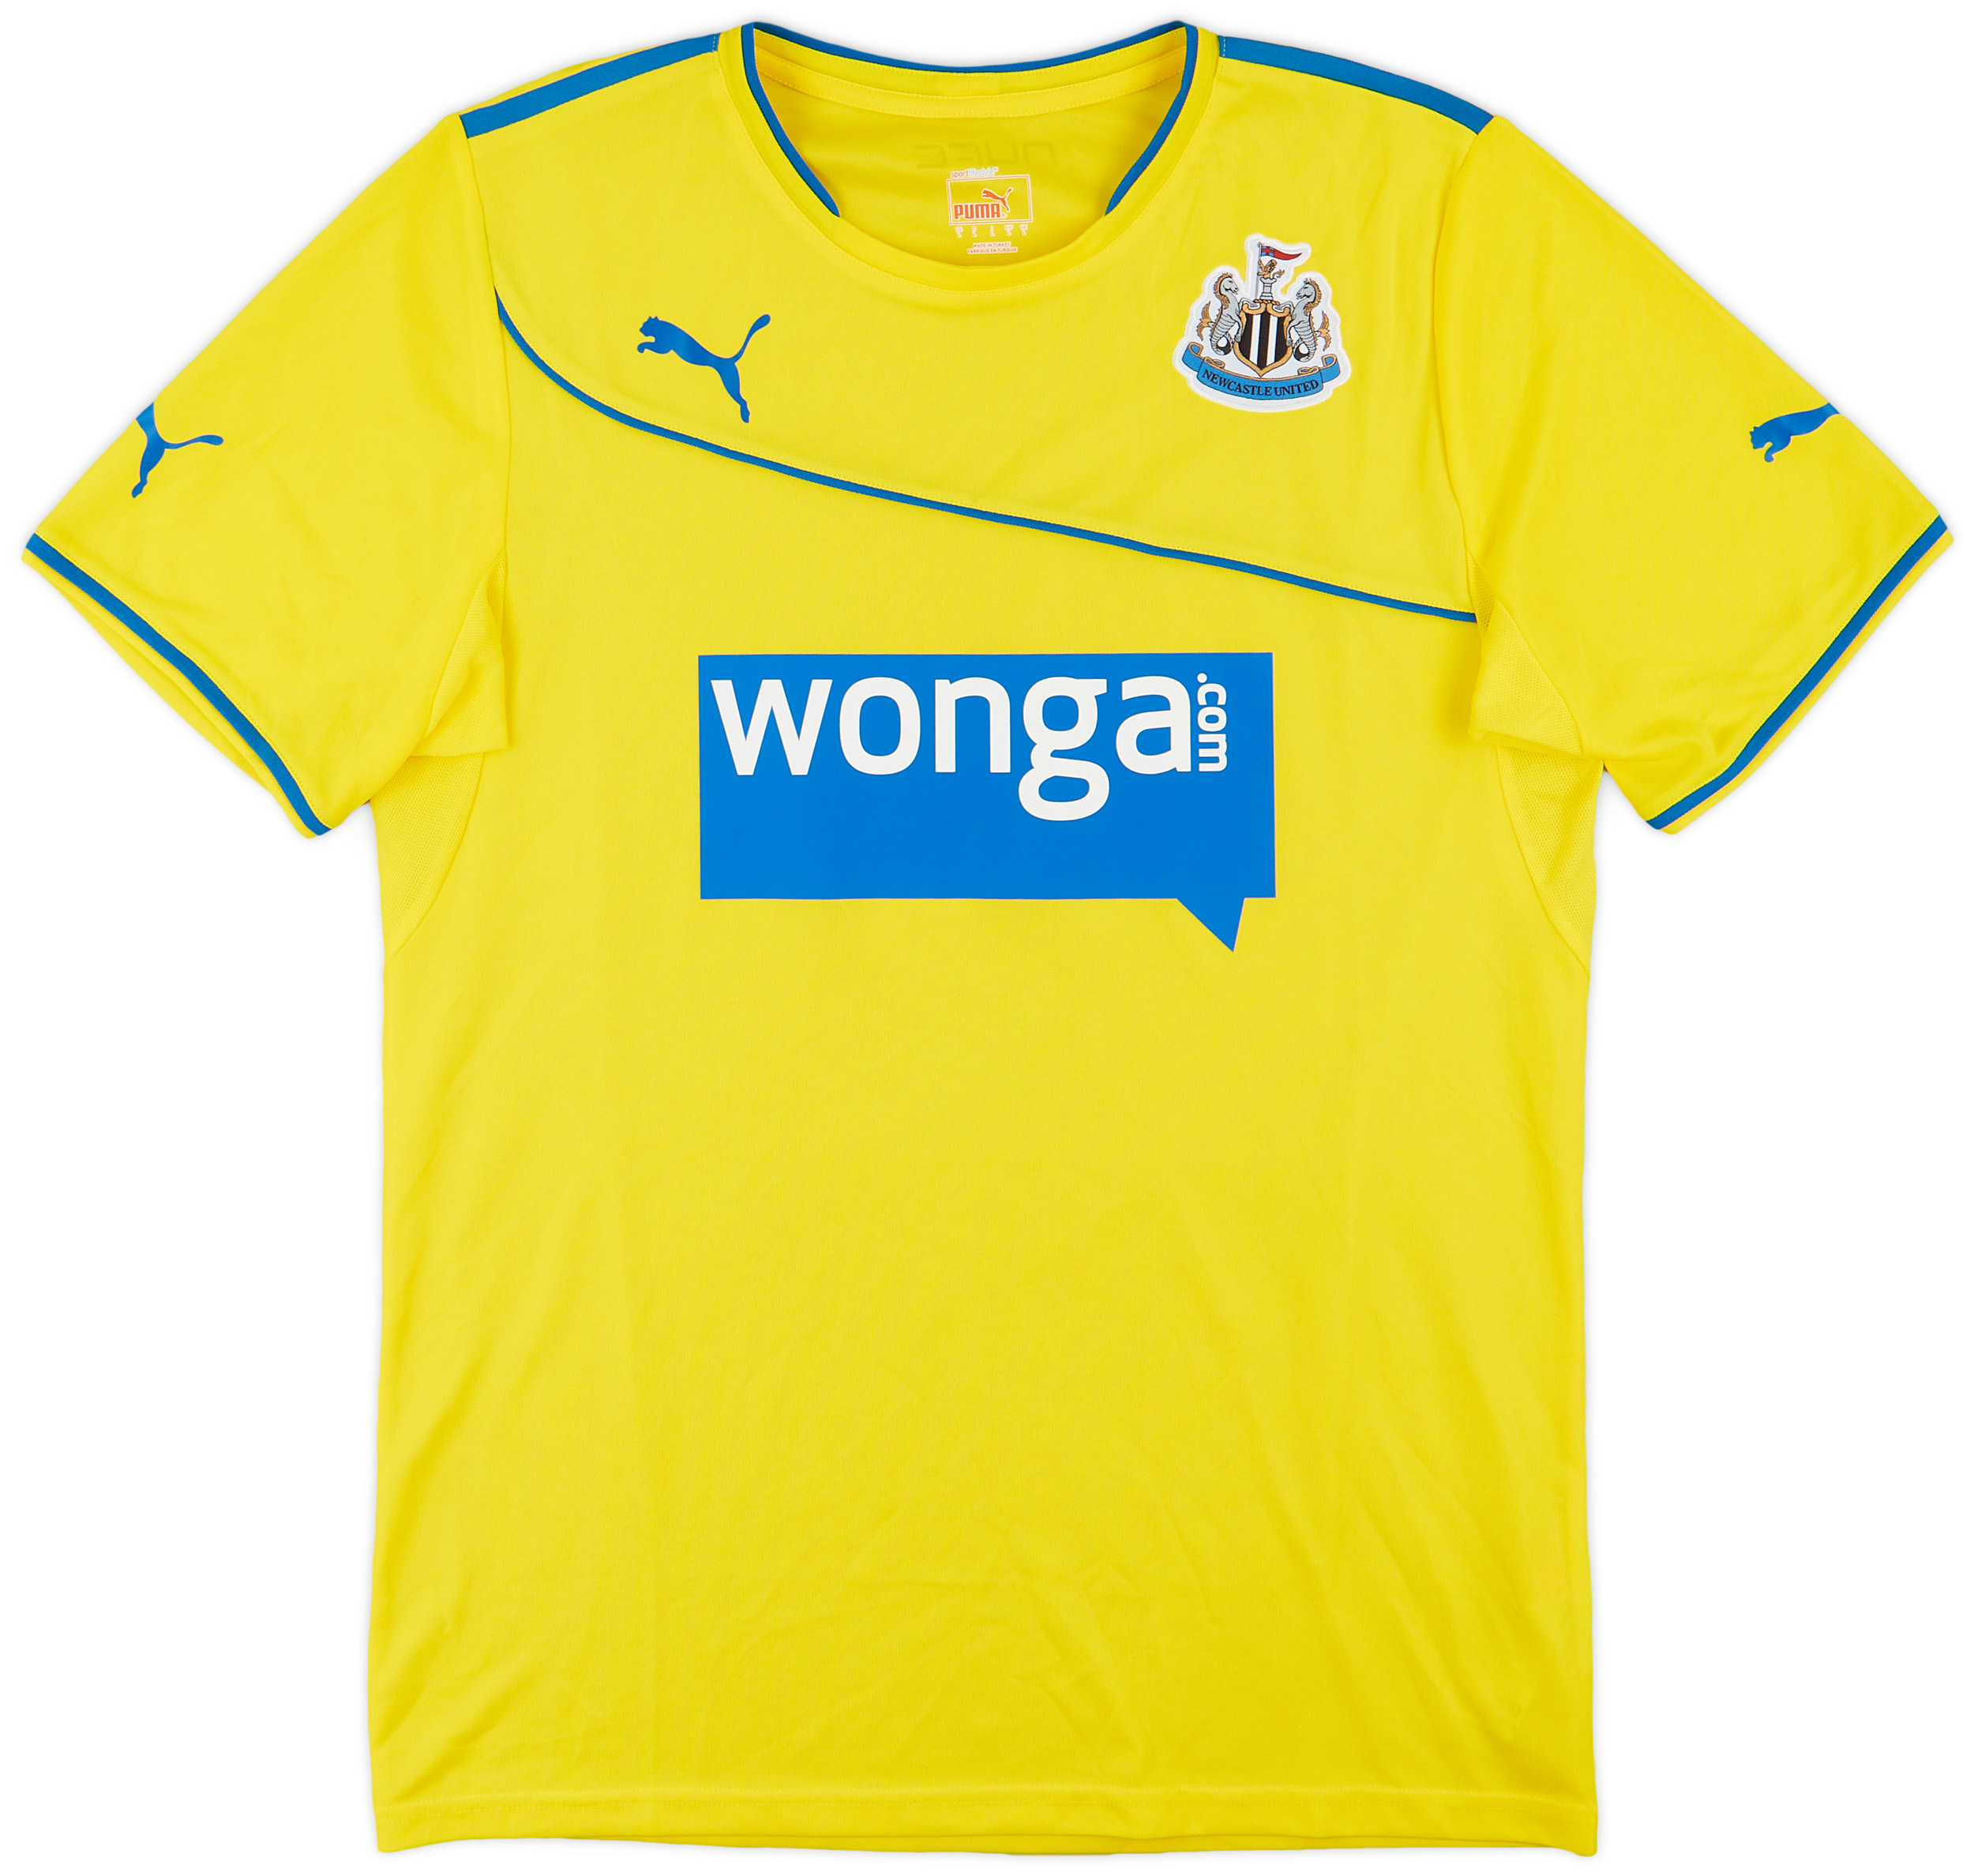 2013-14 Newcastle United Third Shirt - 8/10 - ()